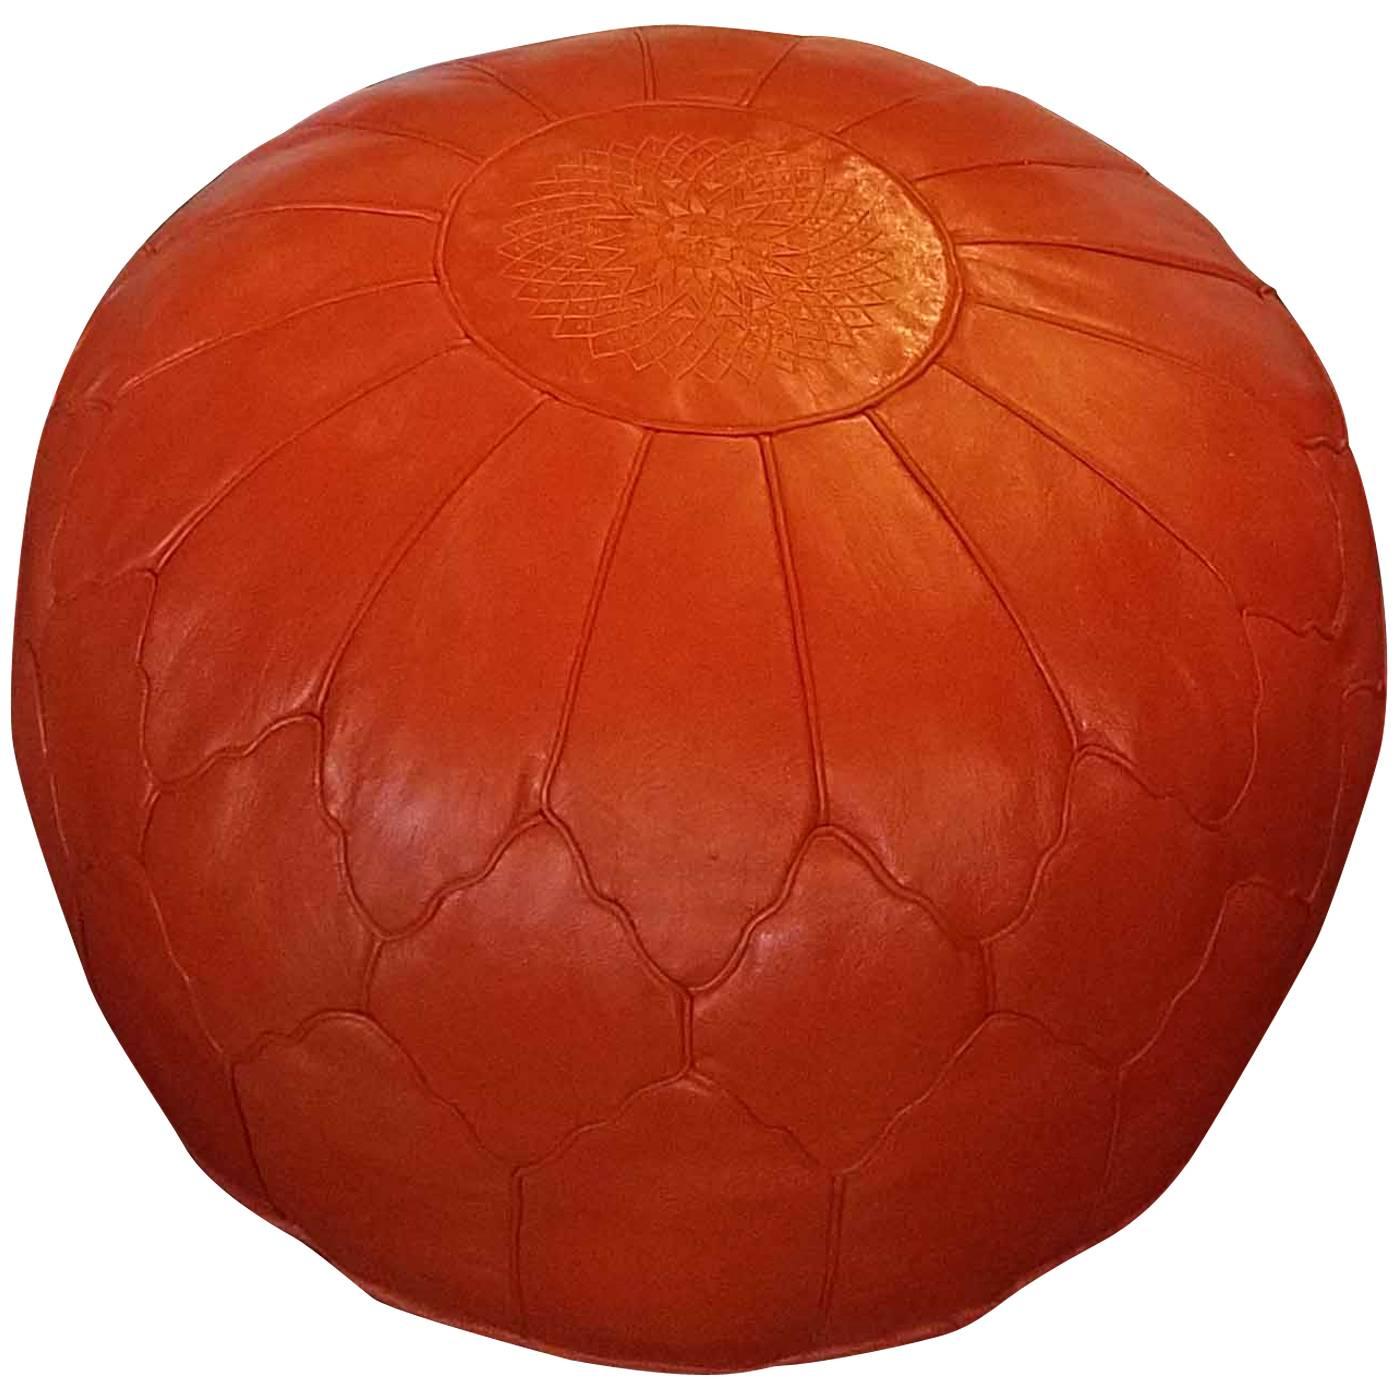 Oversize Moroccan Leather Pouf, Bright Orange For Sale